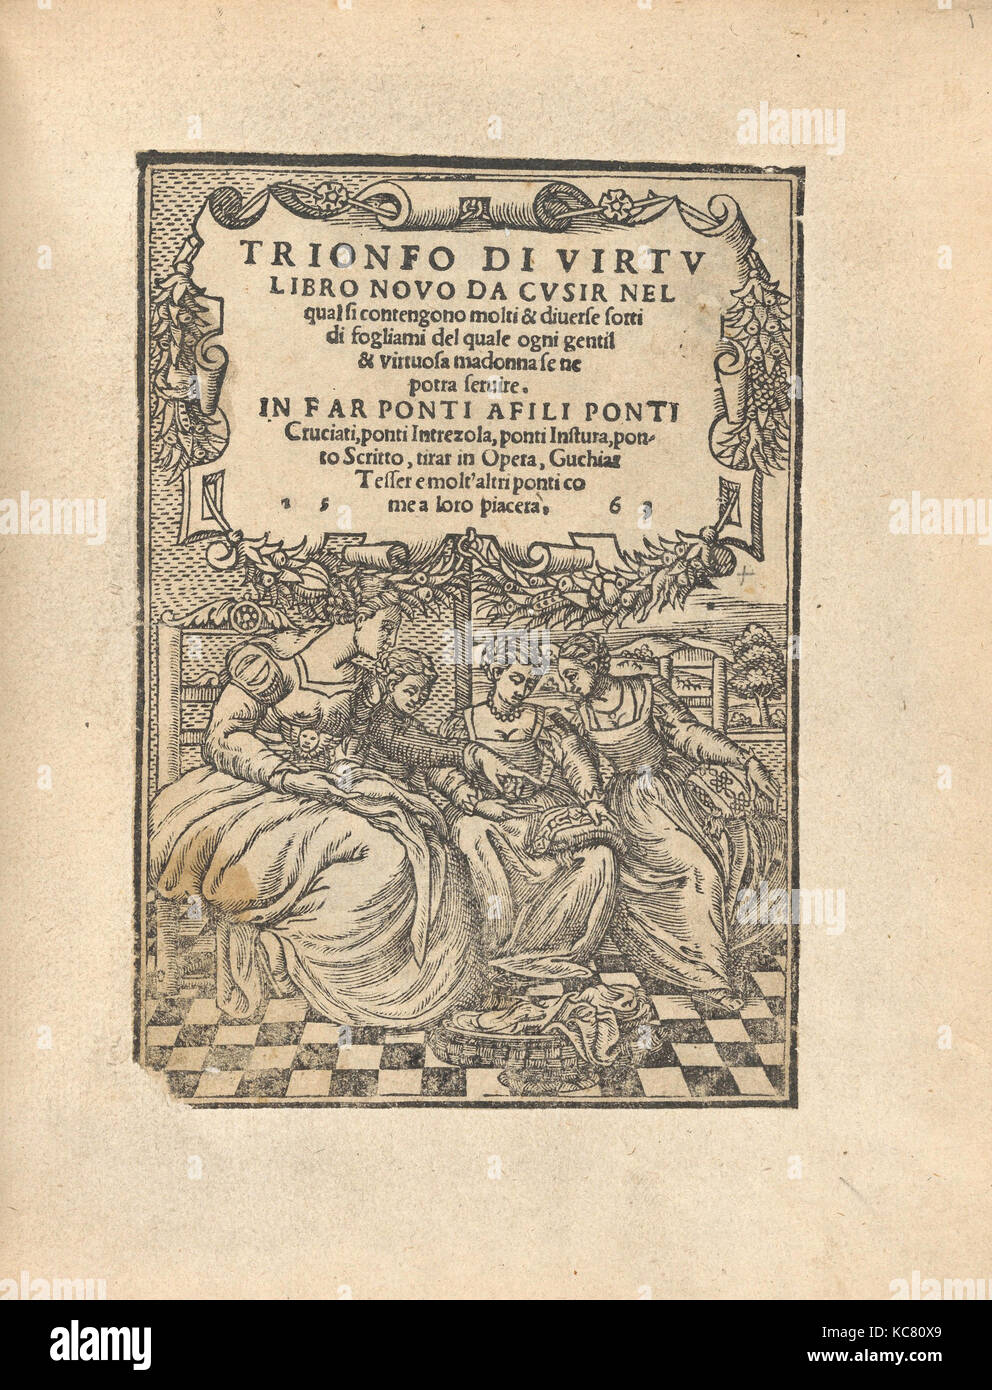 Trionfo di virtu. Libro Novo..., page de titre (recto), 1563 Banque D'Images